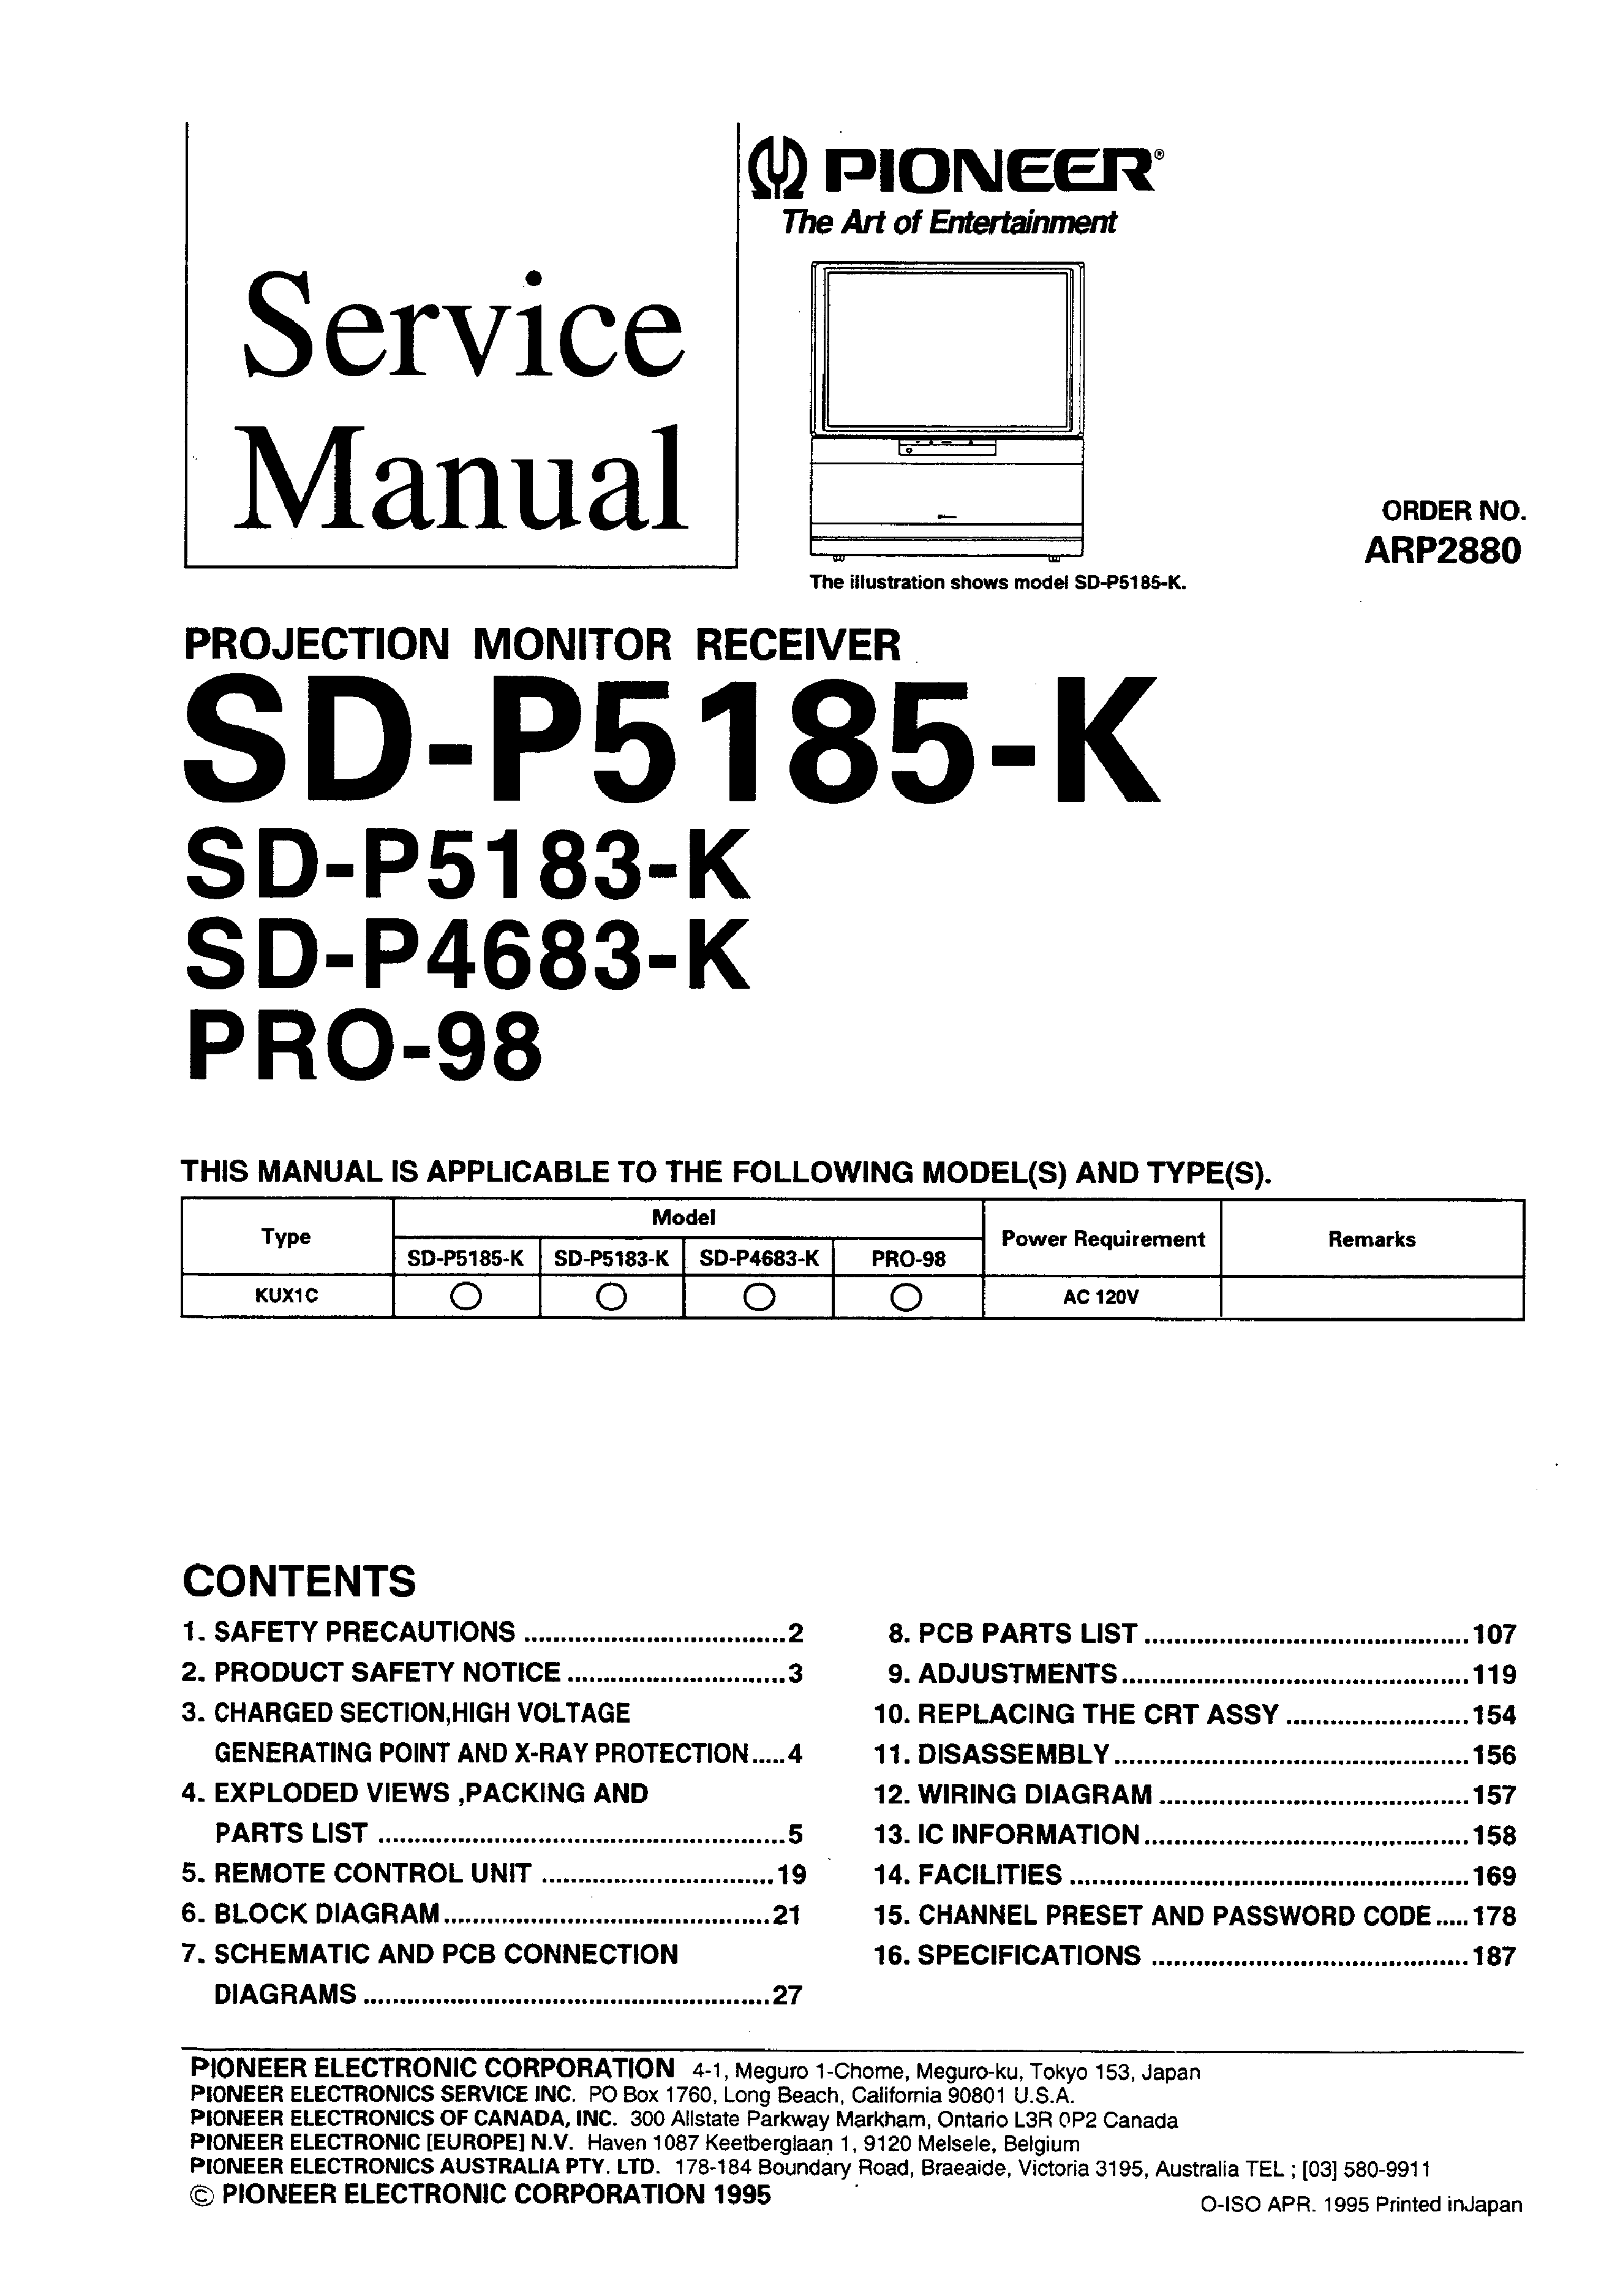 Pioneer CD UB100 Service Manual. Www.s manuals.com. Manual